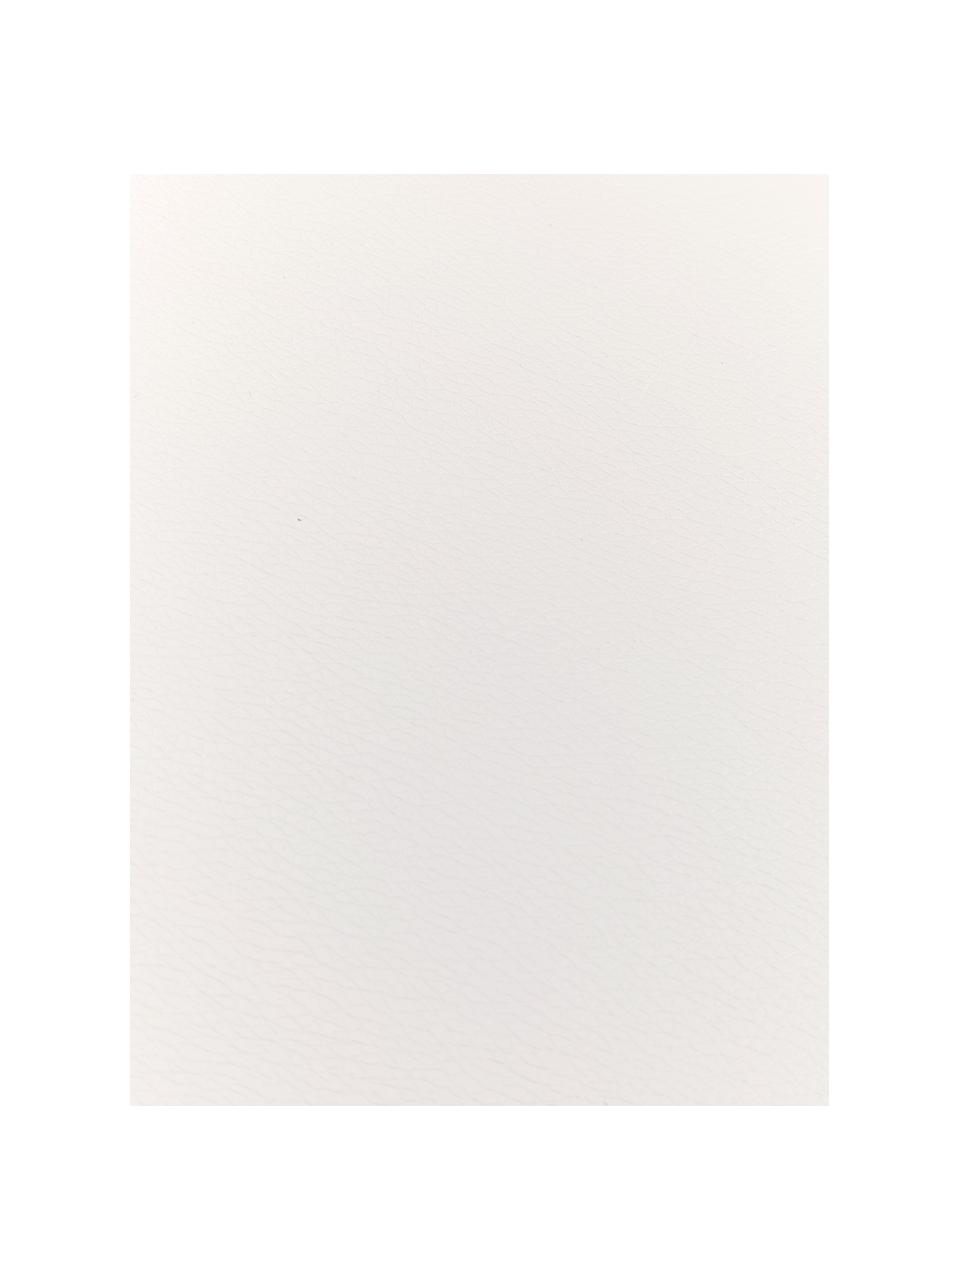 Tovaglietta americana in similpelle Pik 2 pz, Materiale sintetico (PVC), Bianco, Larg. 33 x Lung. 46 cm